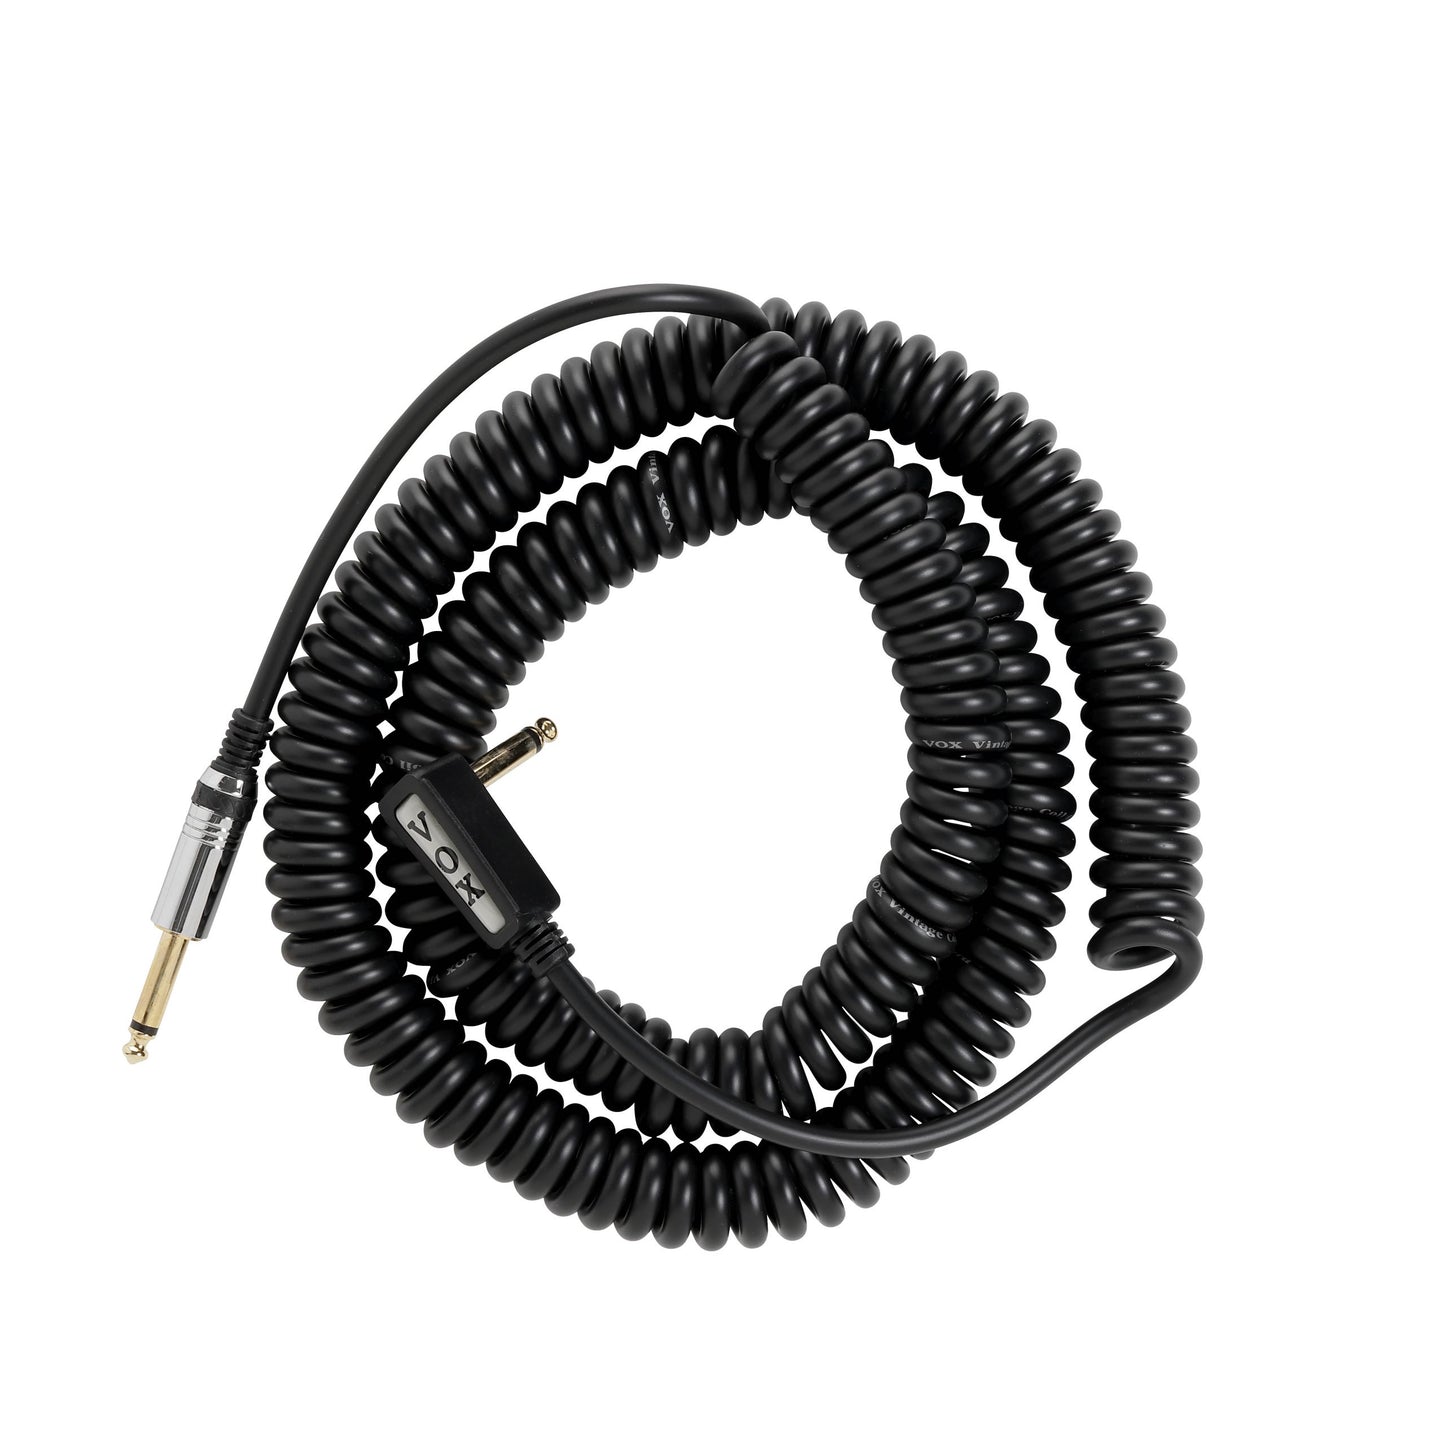 Vox Vintage Coil Cable - 29,5ft - (9 metros) Black